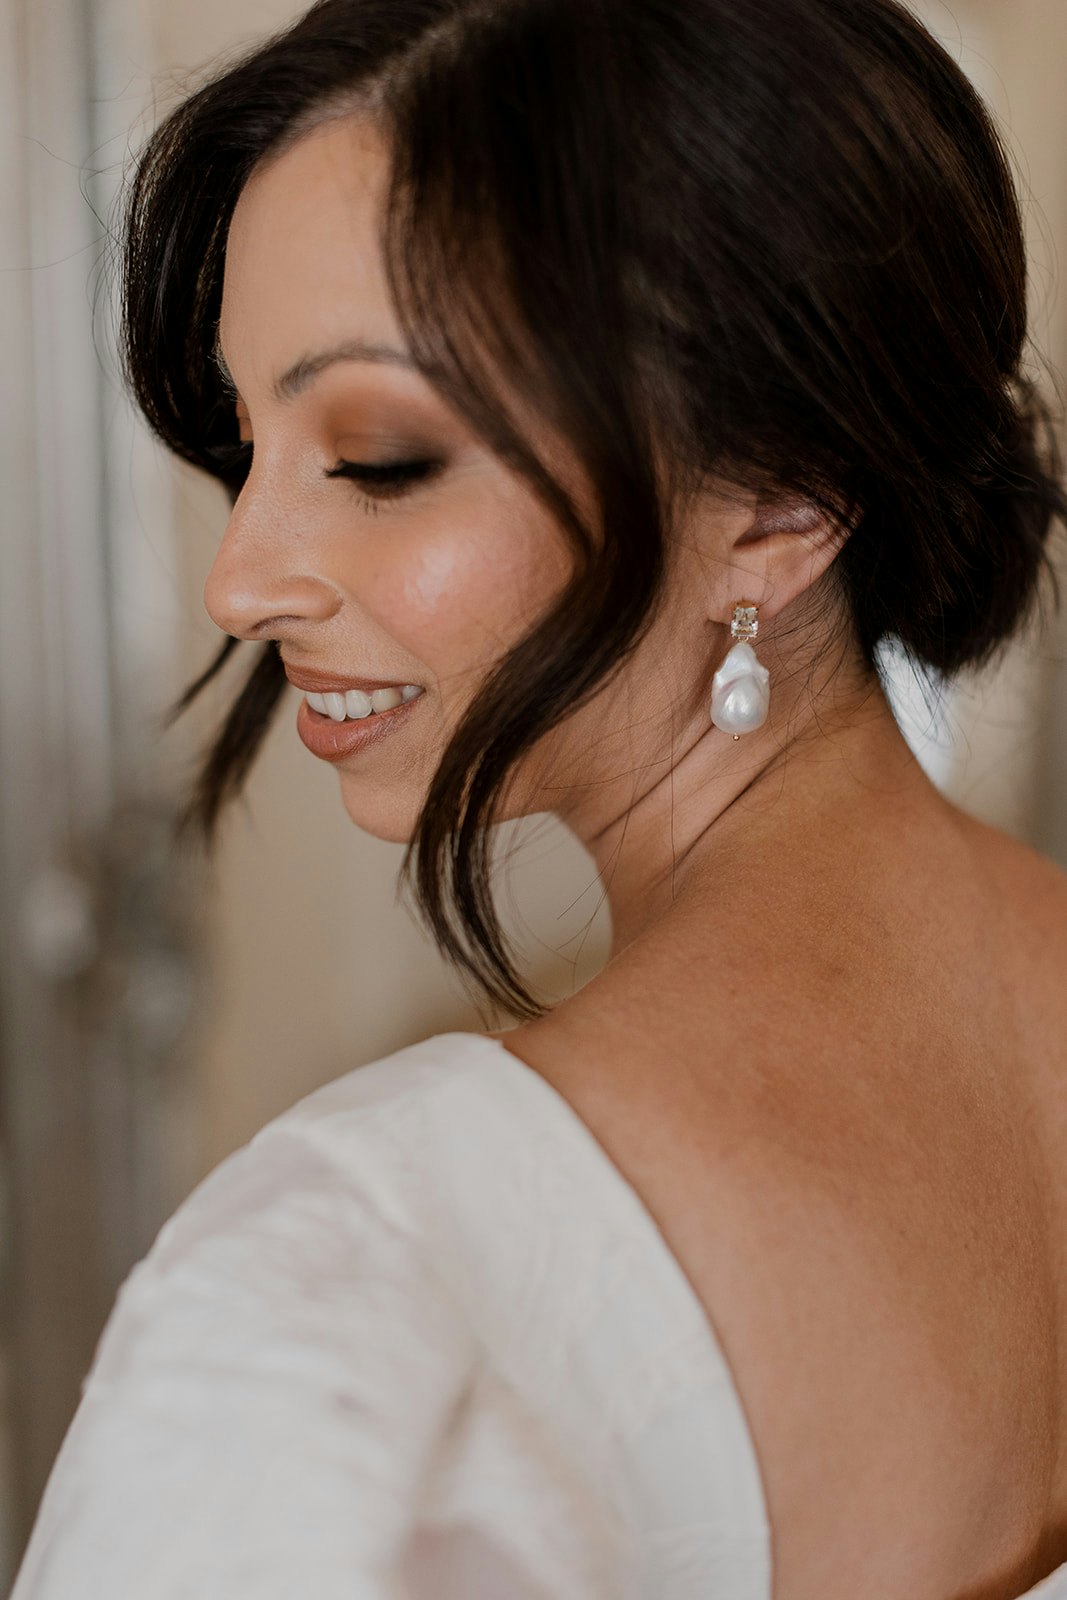 Bride wearing pearl earrings